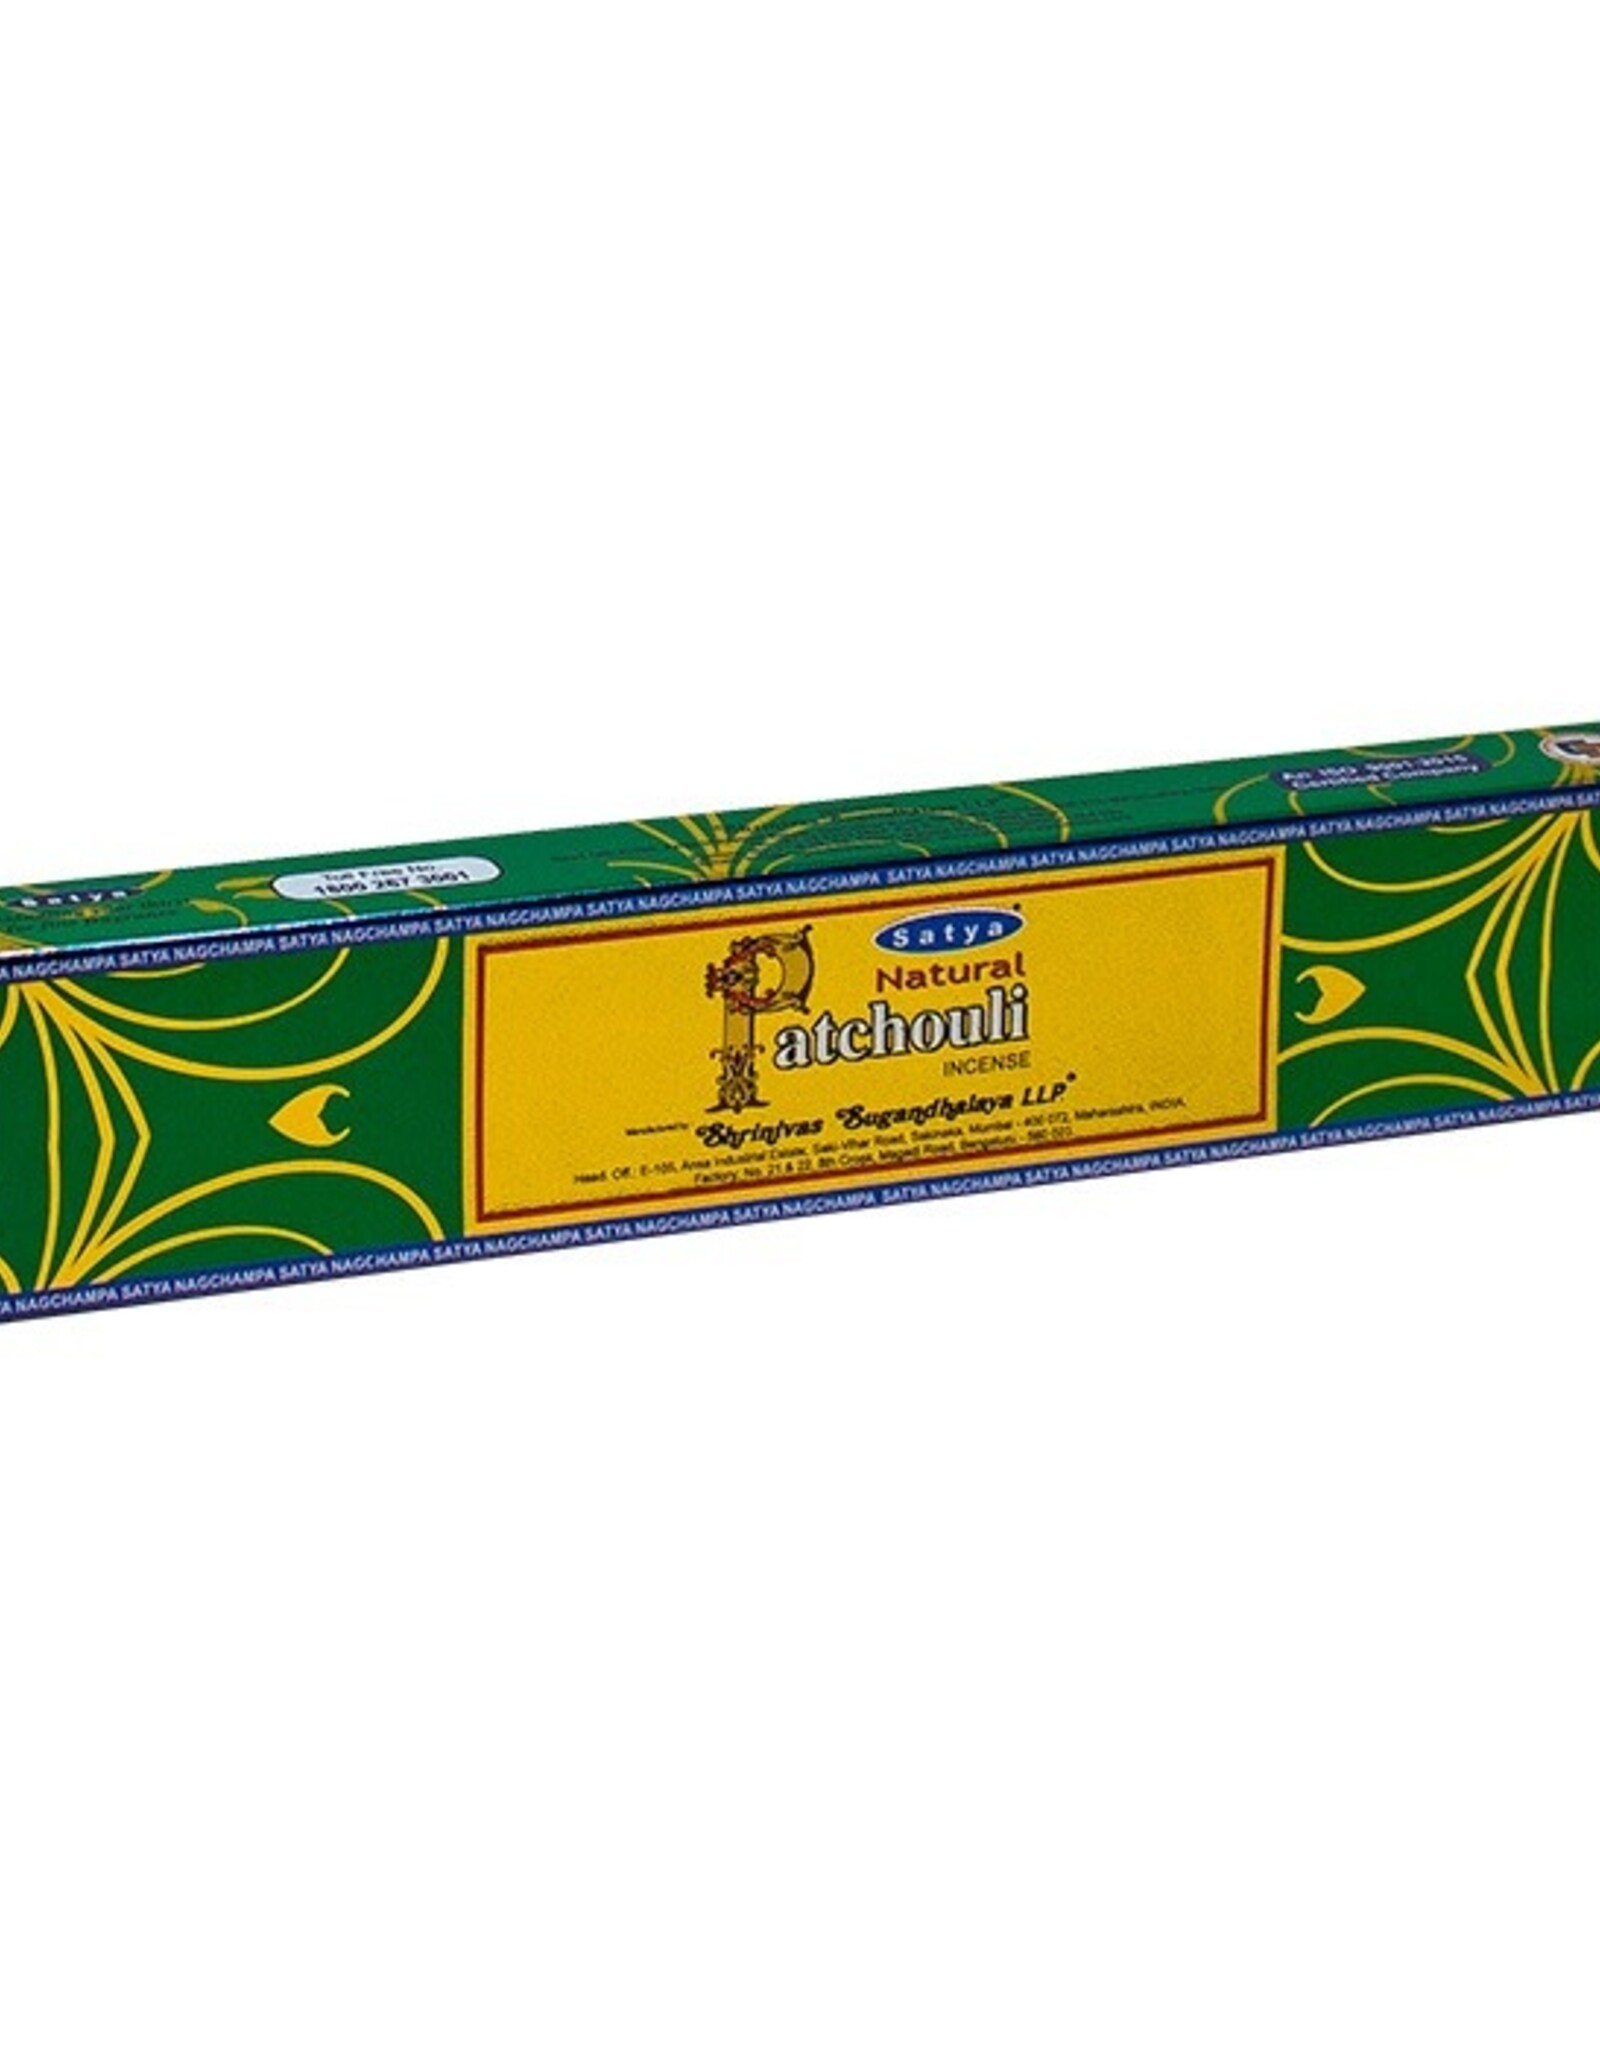 Satya Natural Patchouli Incense Sticks (15 Gram Box)